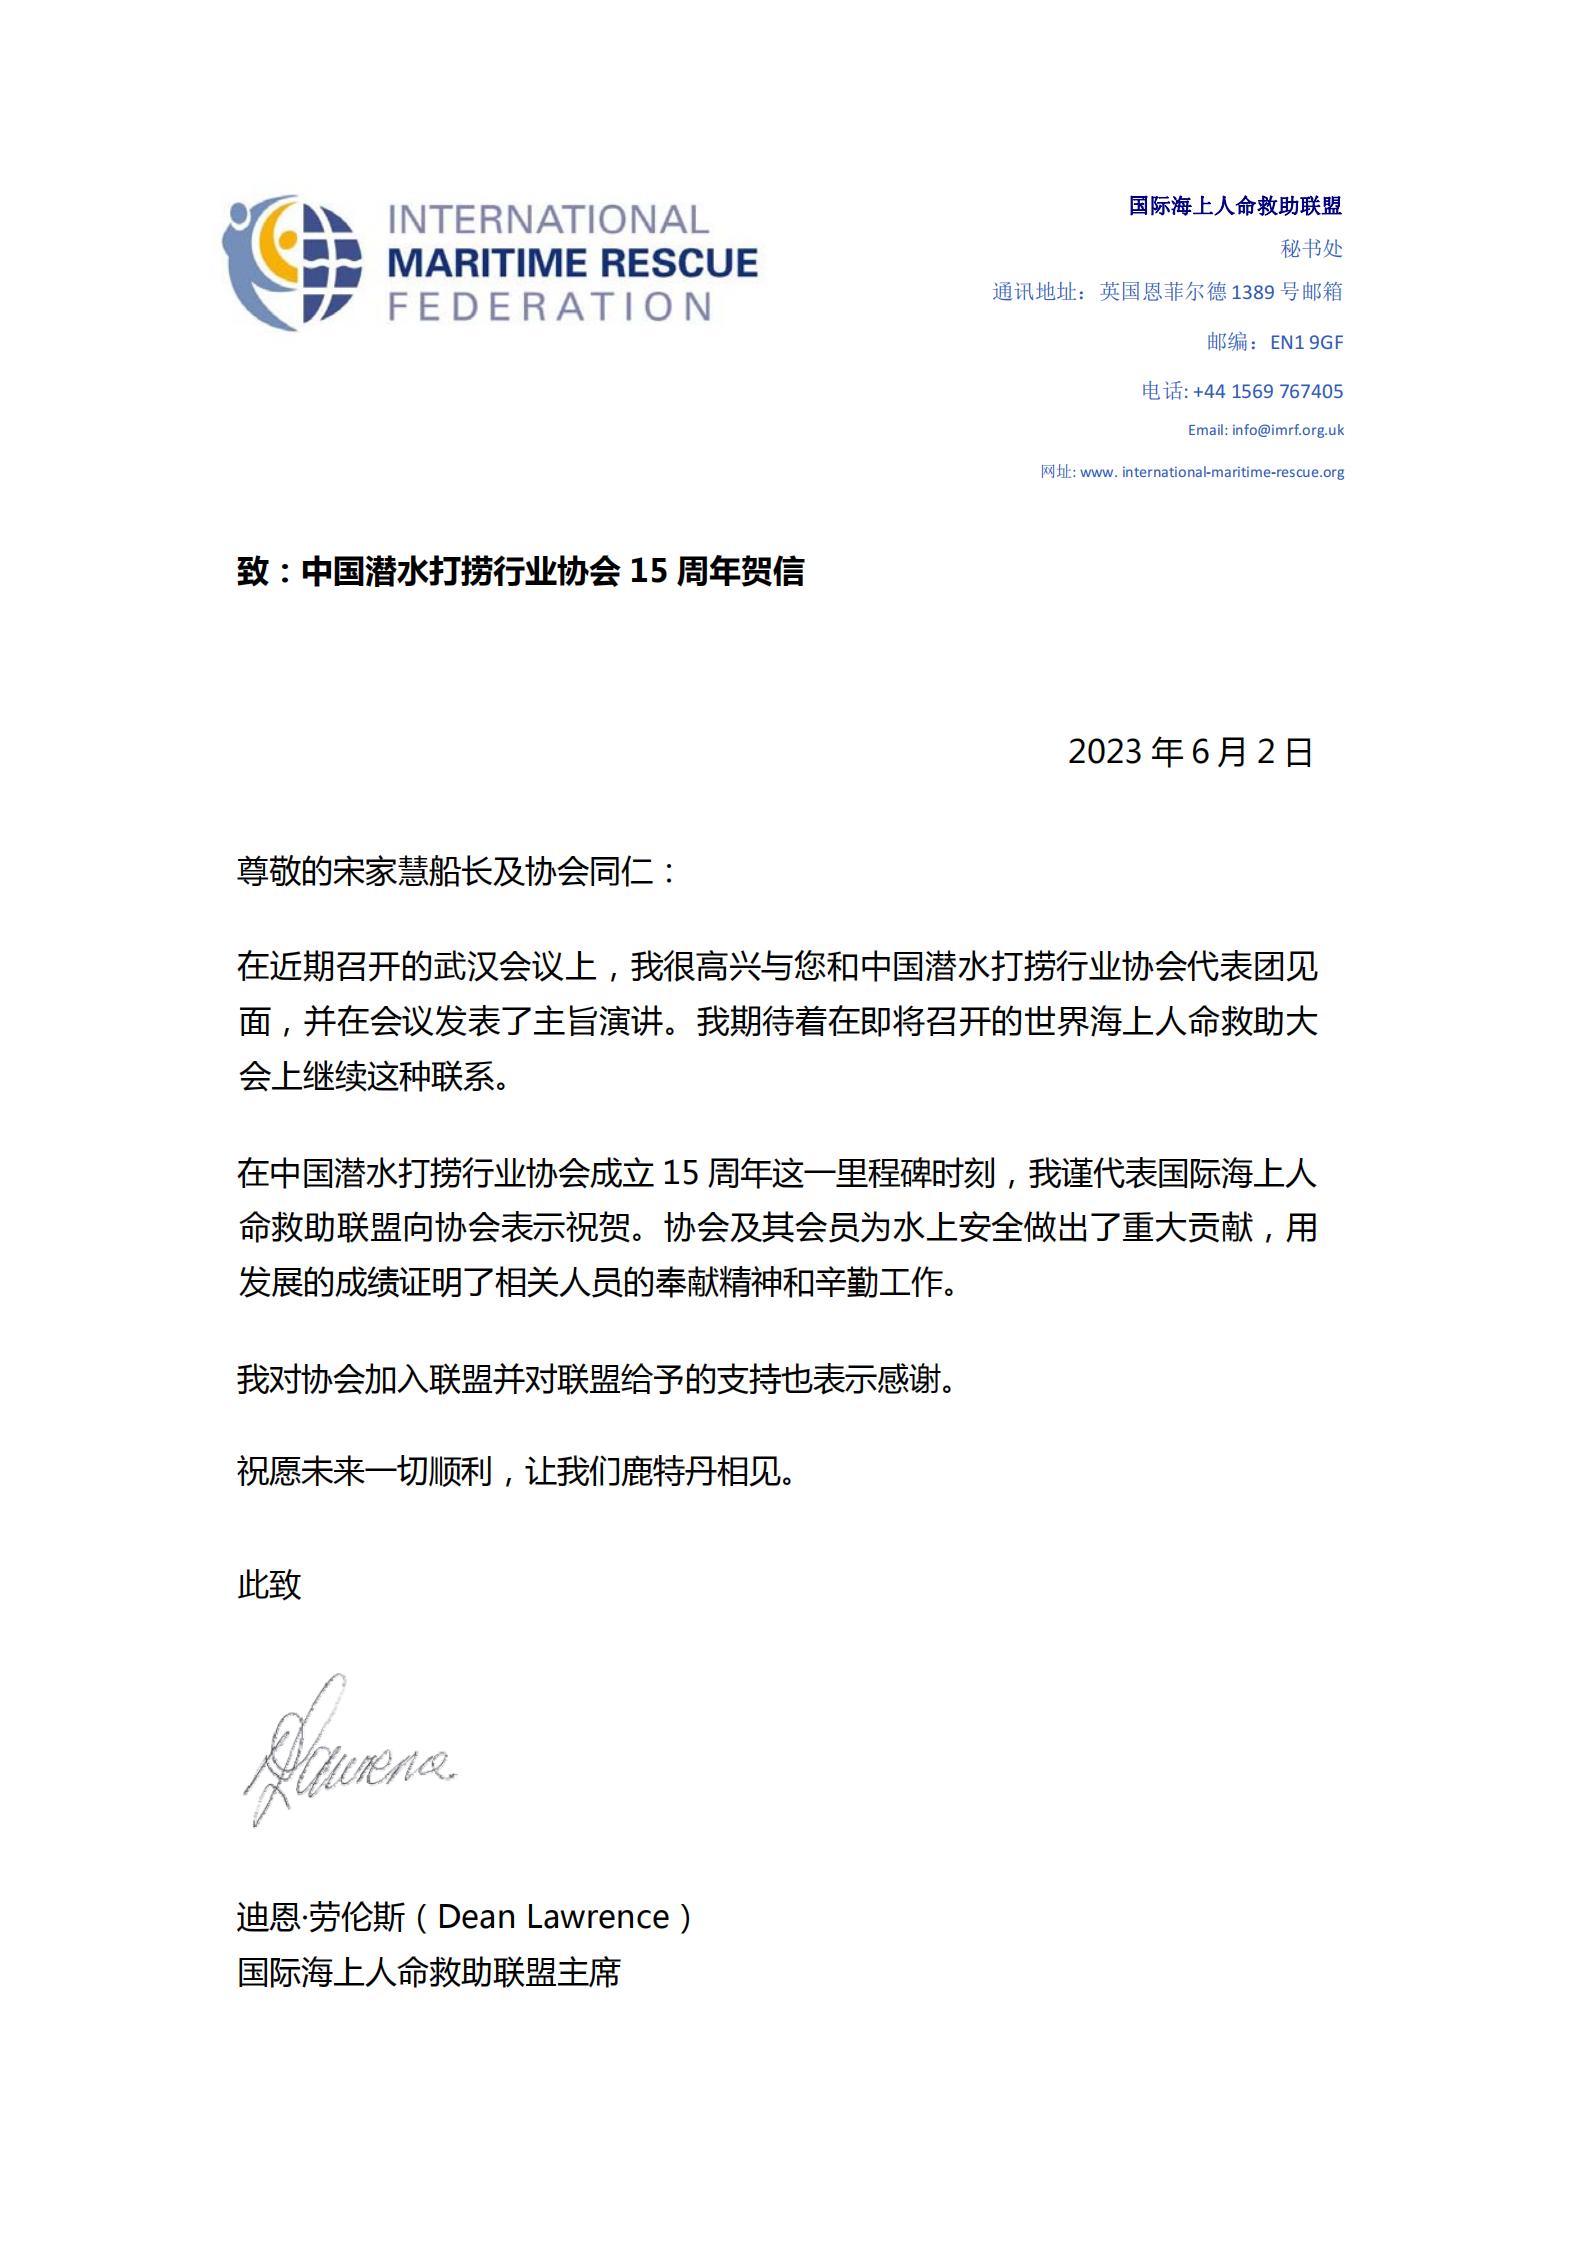 Letter-to-CDSA-国际海上人命救助联盟_00.jpg